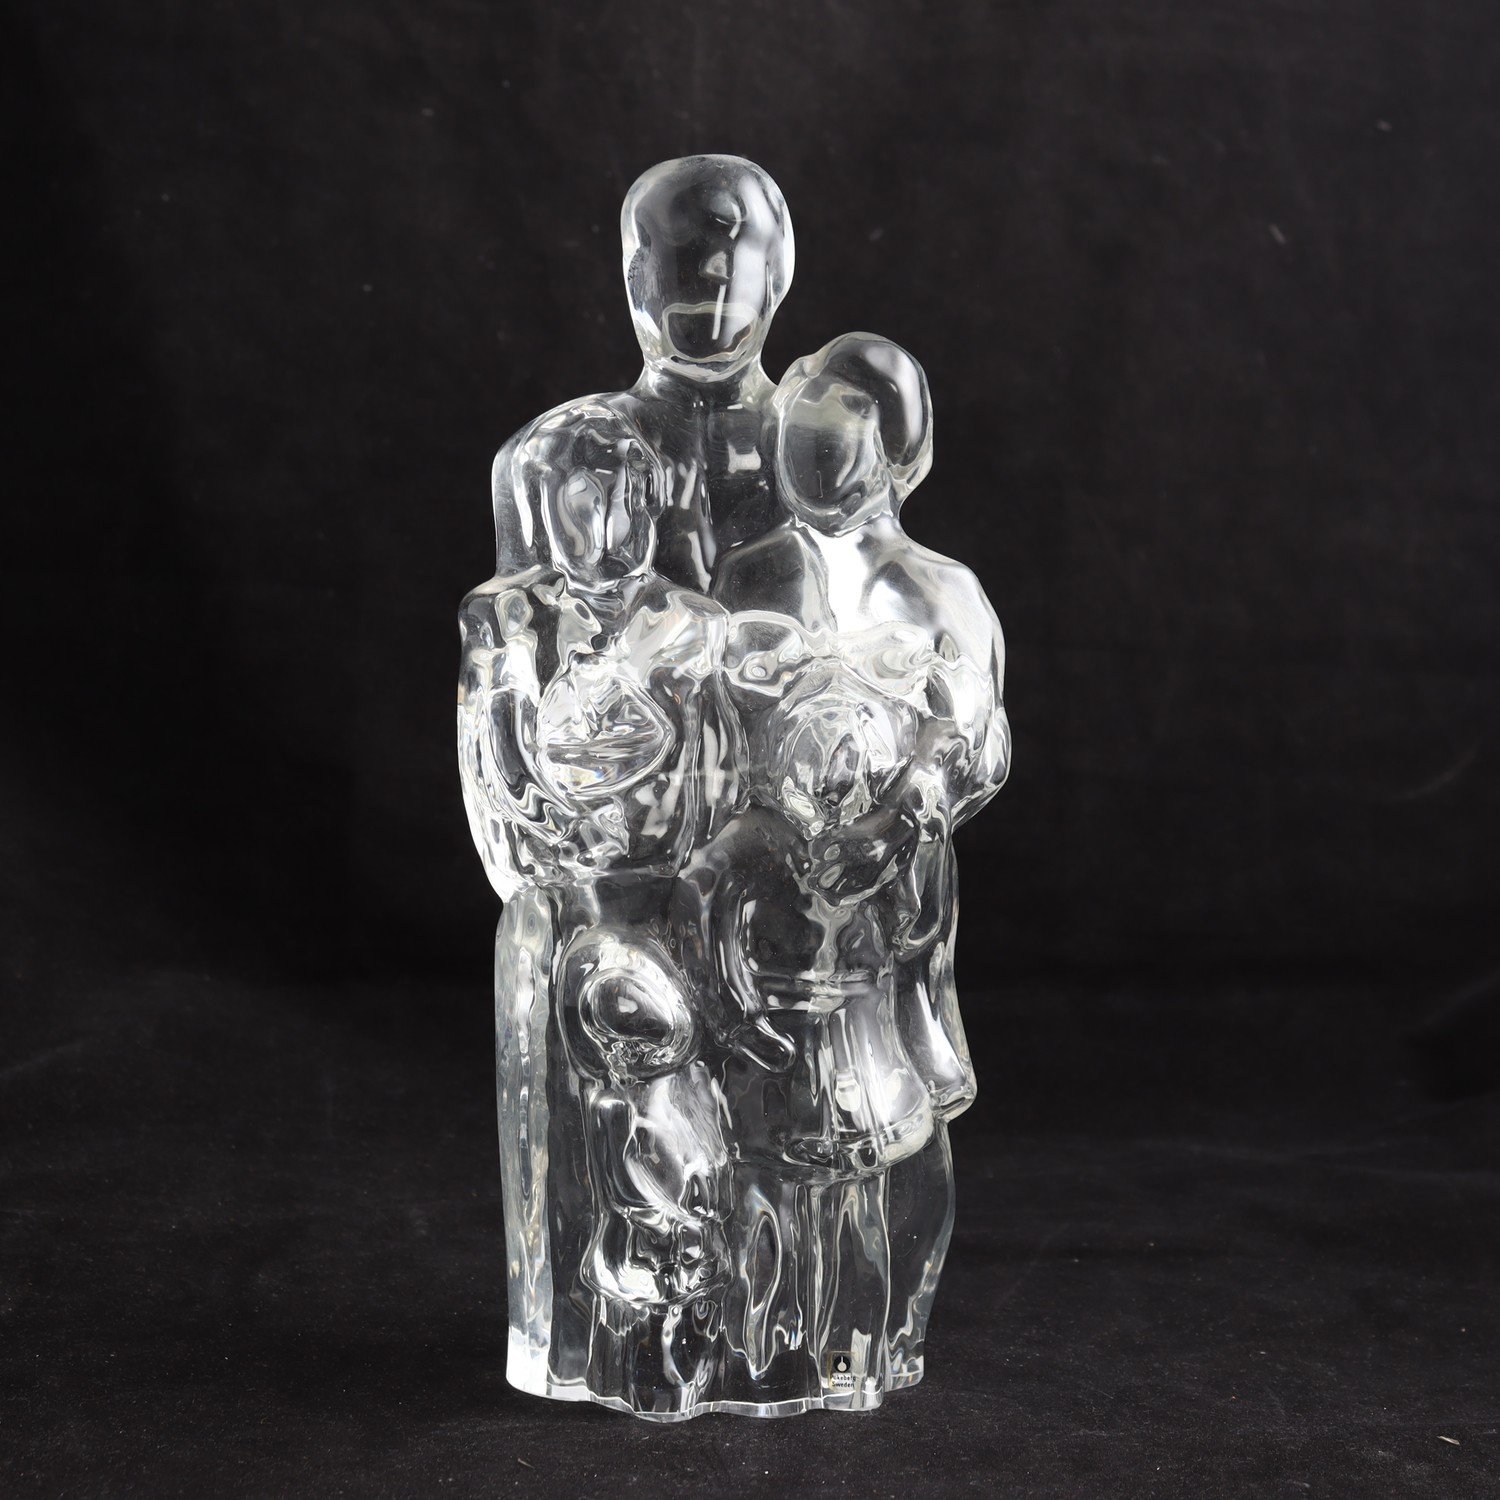 Skulptur i glas, ”Familj”, Uno Westerberg, Pukebergs glasbruk. Samfraktas ej.